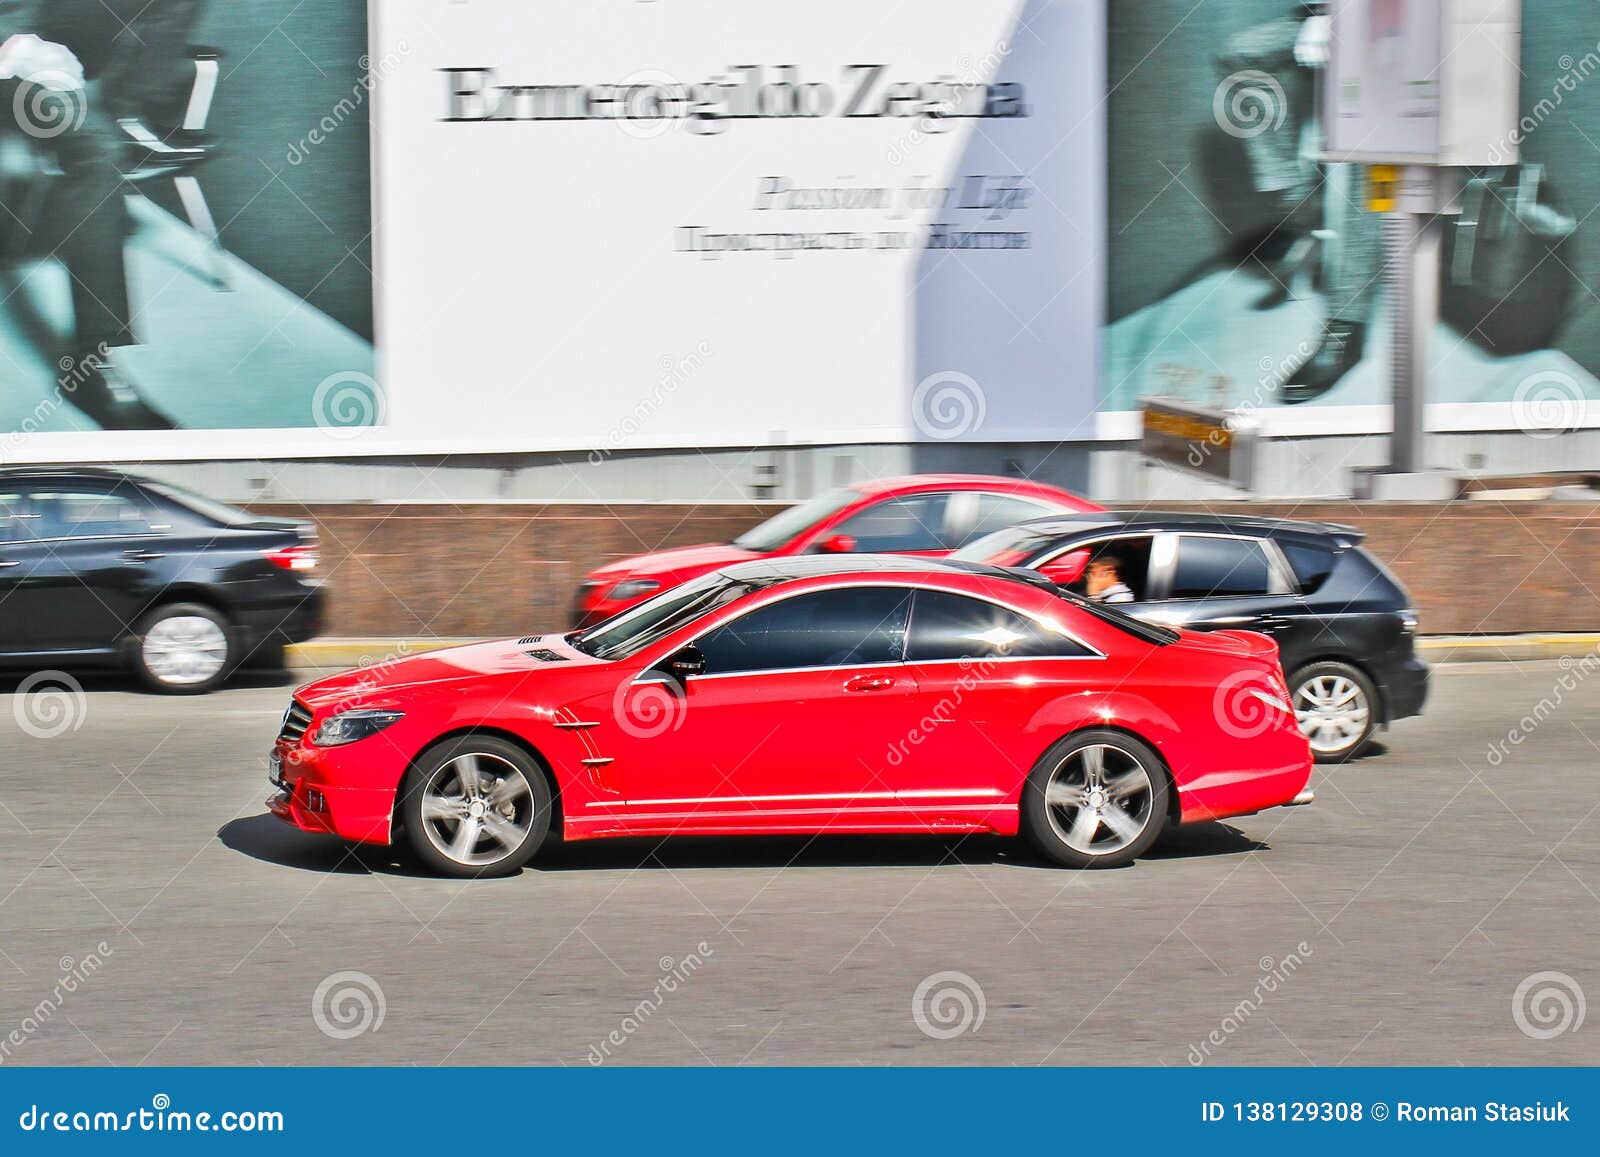 April Kiev Ukraine Mercedes Benz Cl In The City Editorial Stock Photo Image Of